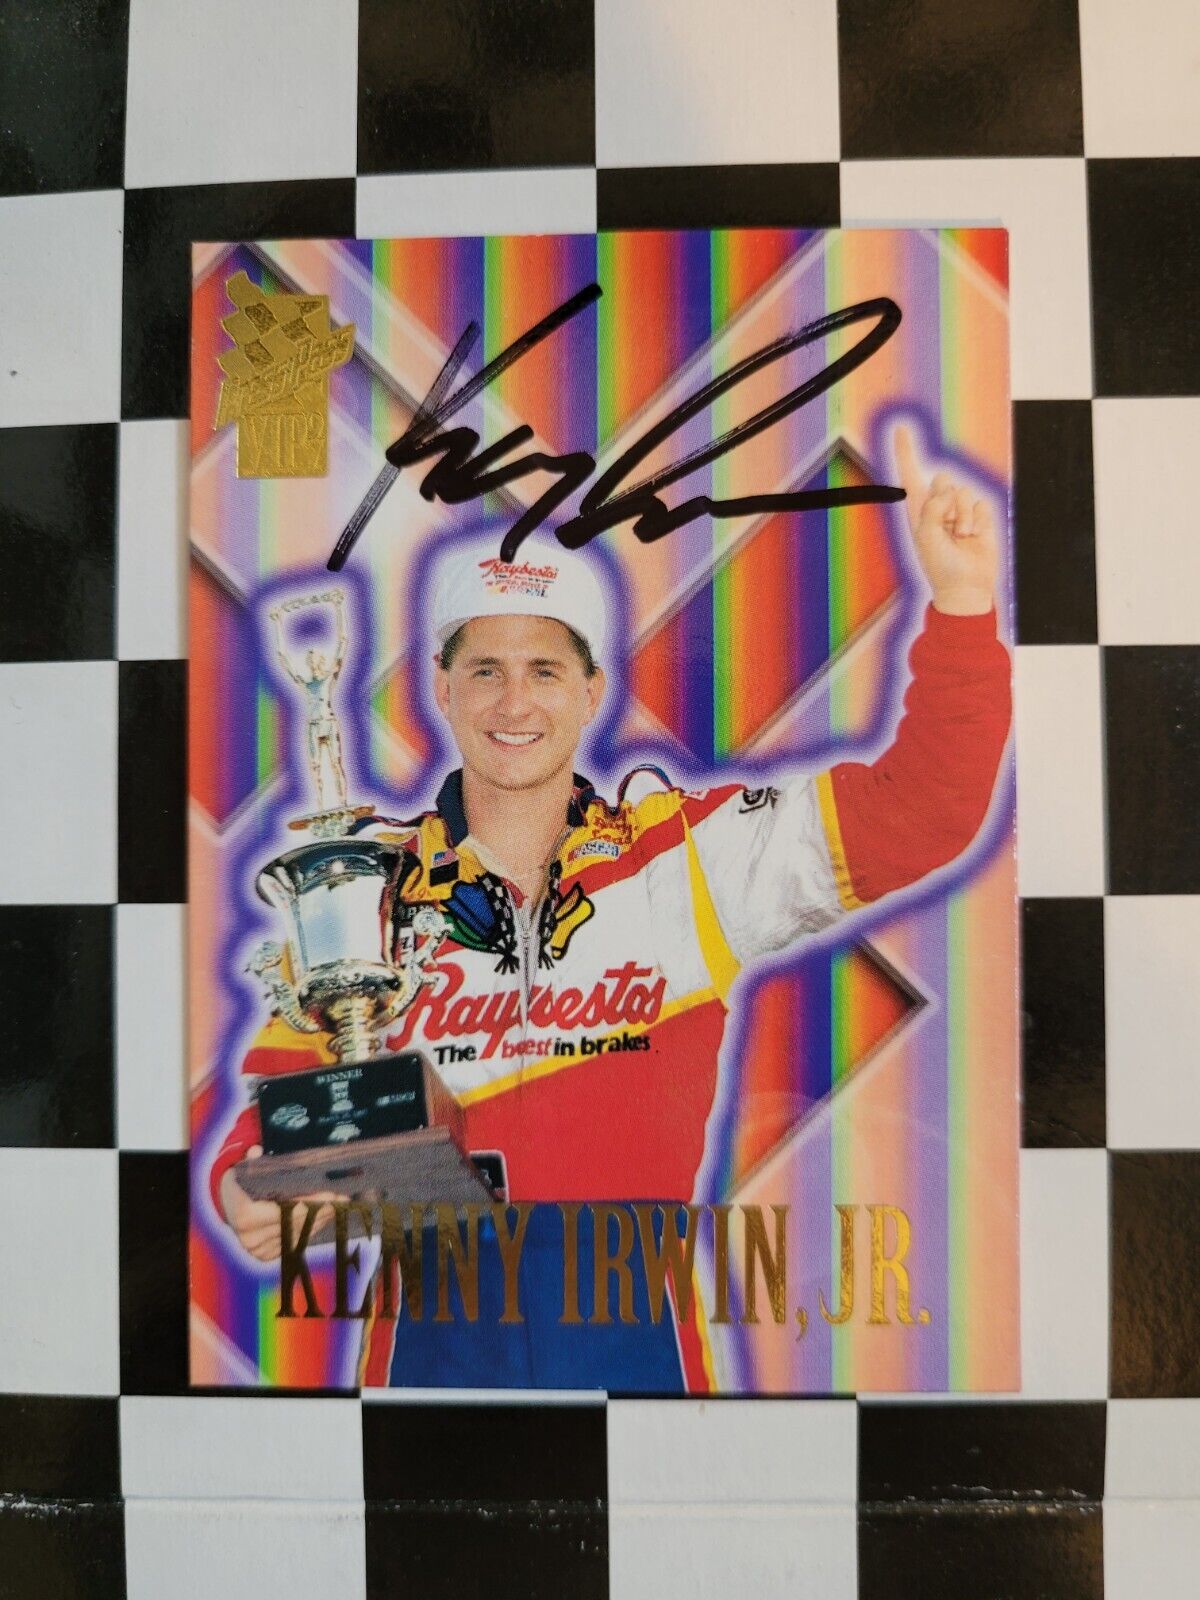 🏁🏆Kenny Irwin Jr. Autographed NASCAR Card🏁🏆